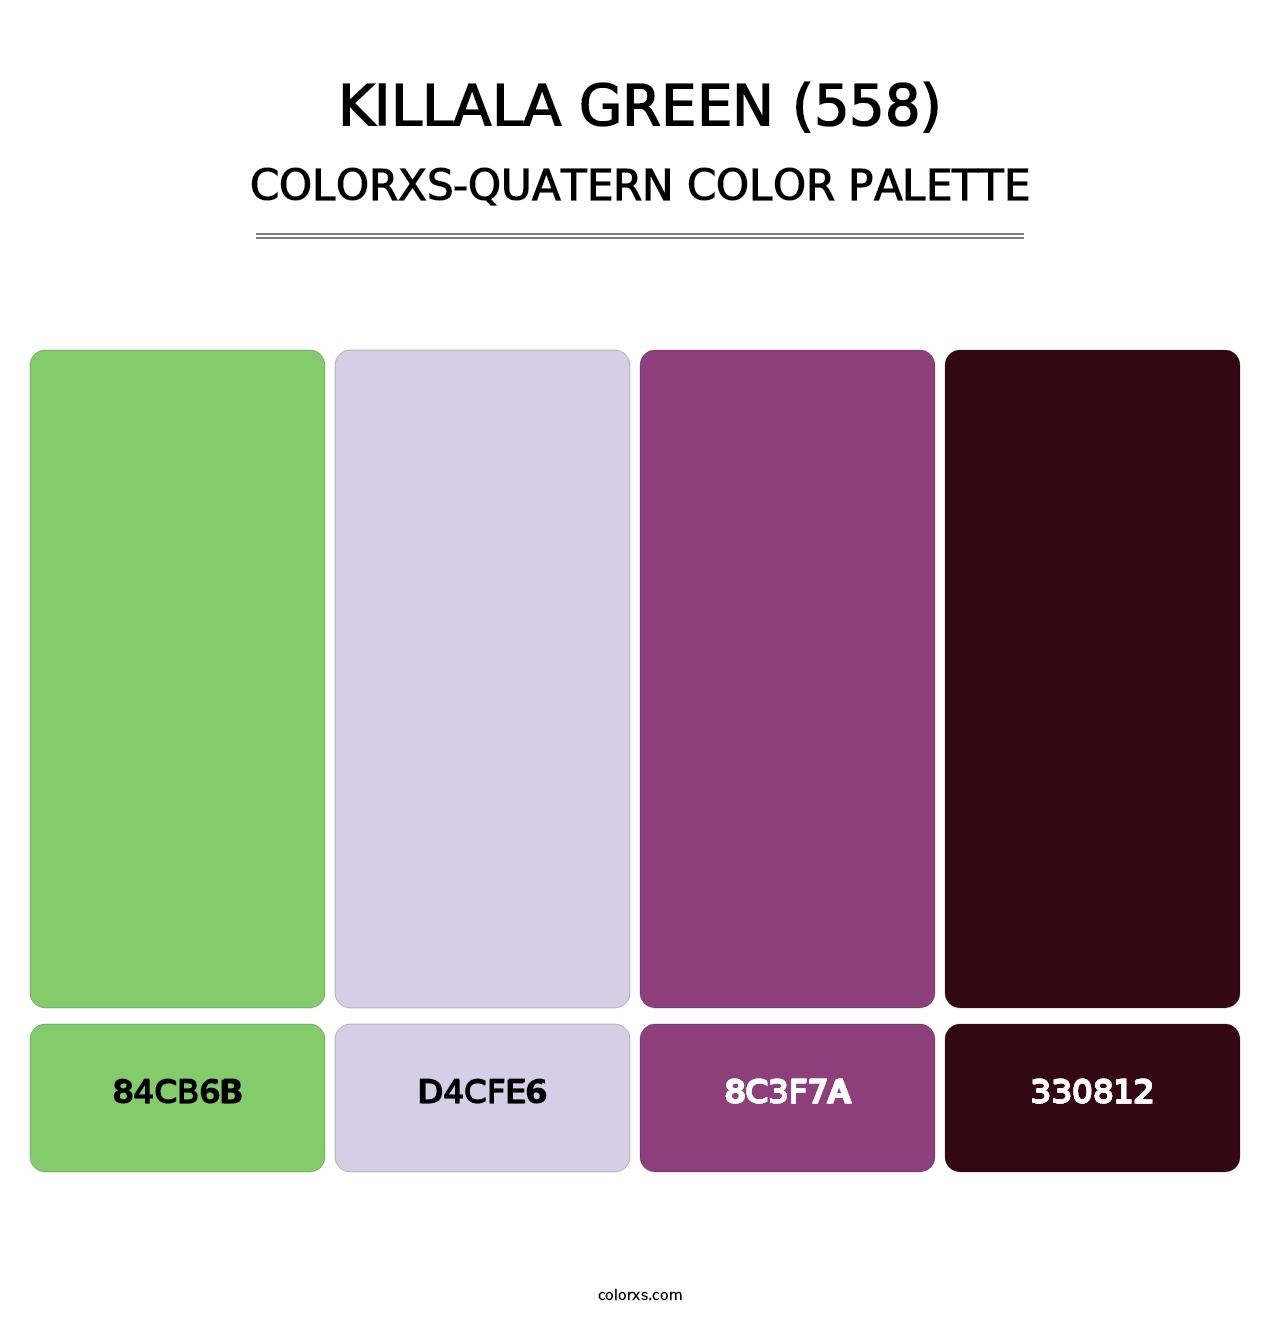 Killala Green (558) - Colorxs Quatern Palette